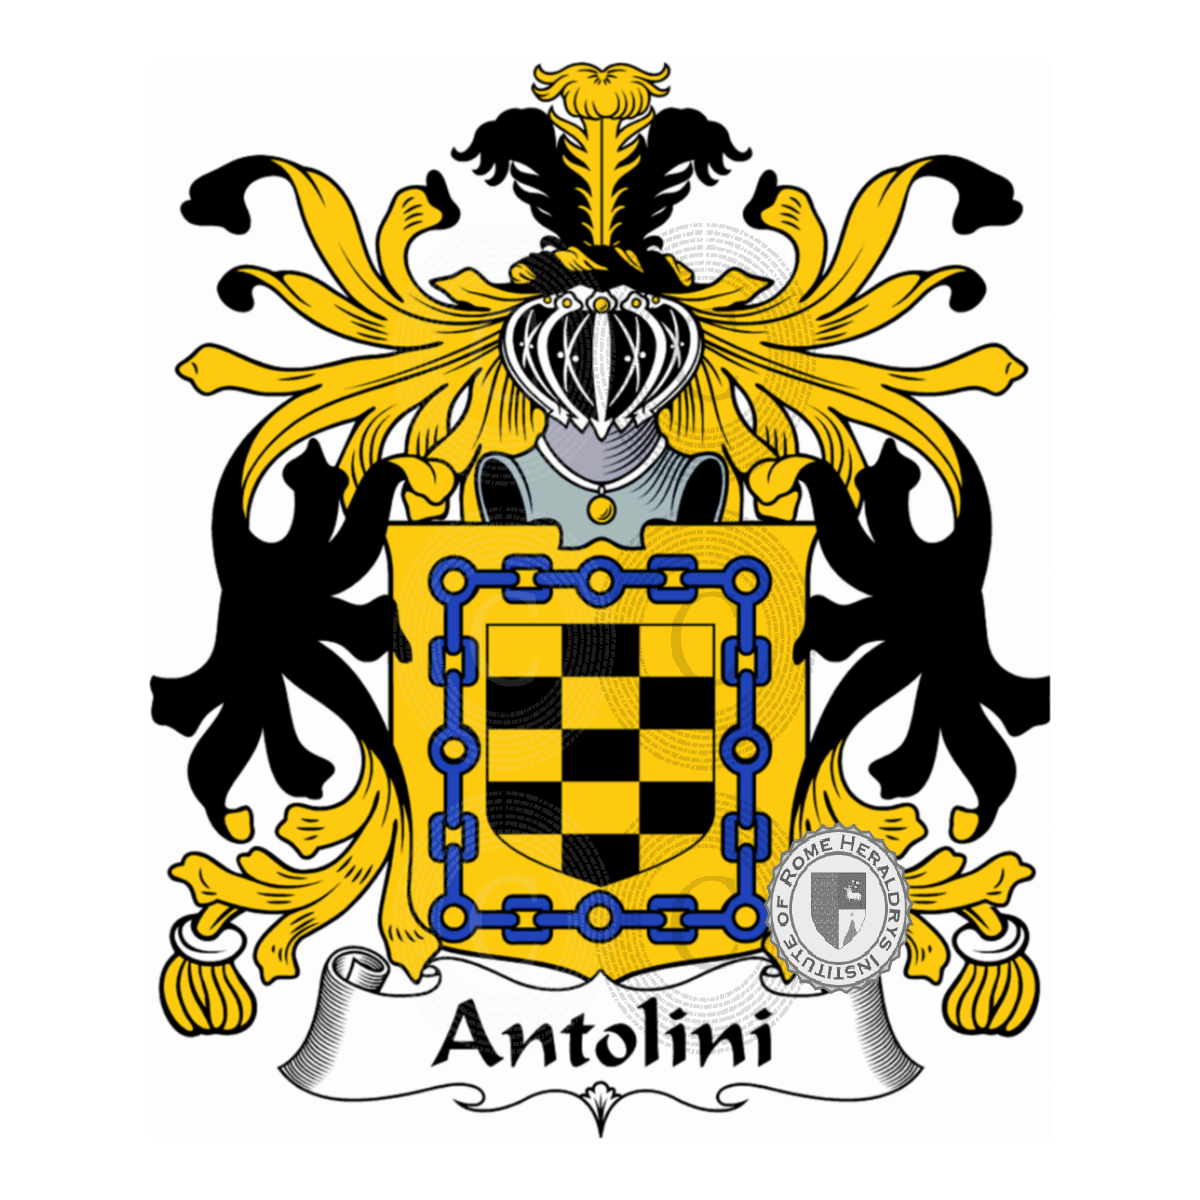 Brasão da famíliaAntolini, Antolino,Antollini